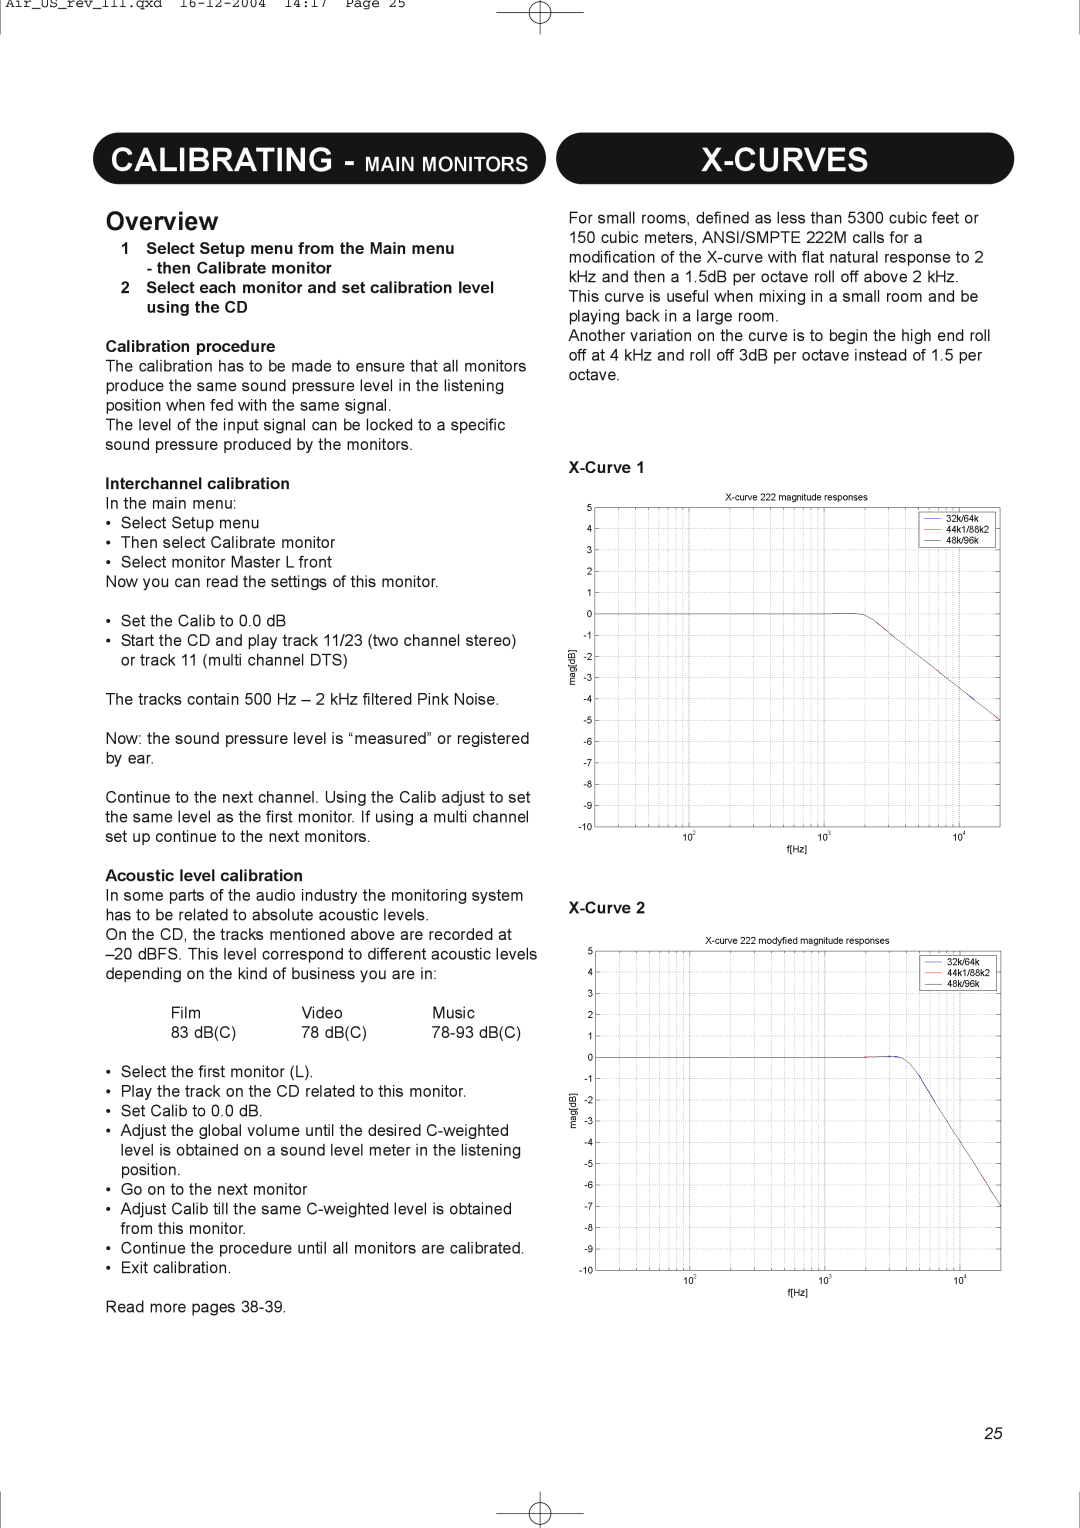 Dynaudio pmn manual Calibrating - Main Monitors, X-Curves, Overview, Calibration procedure, Interchannel calibration 